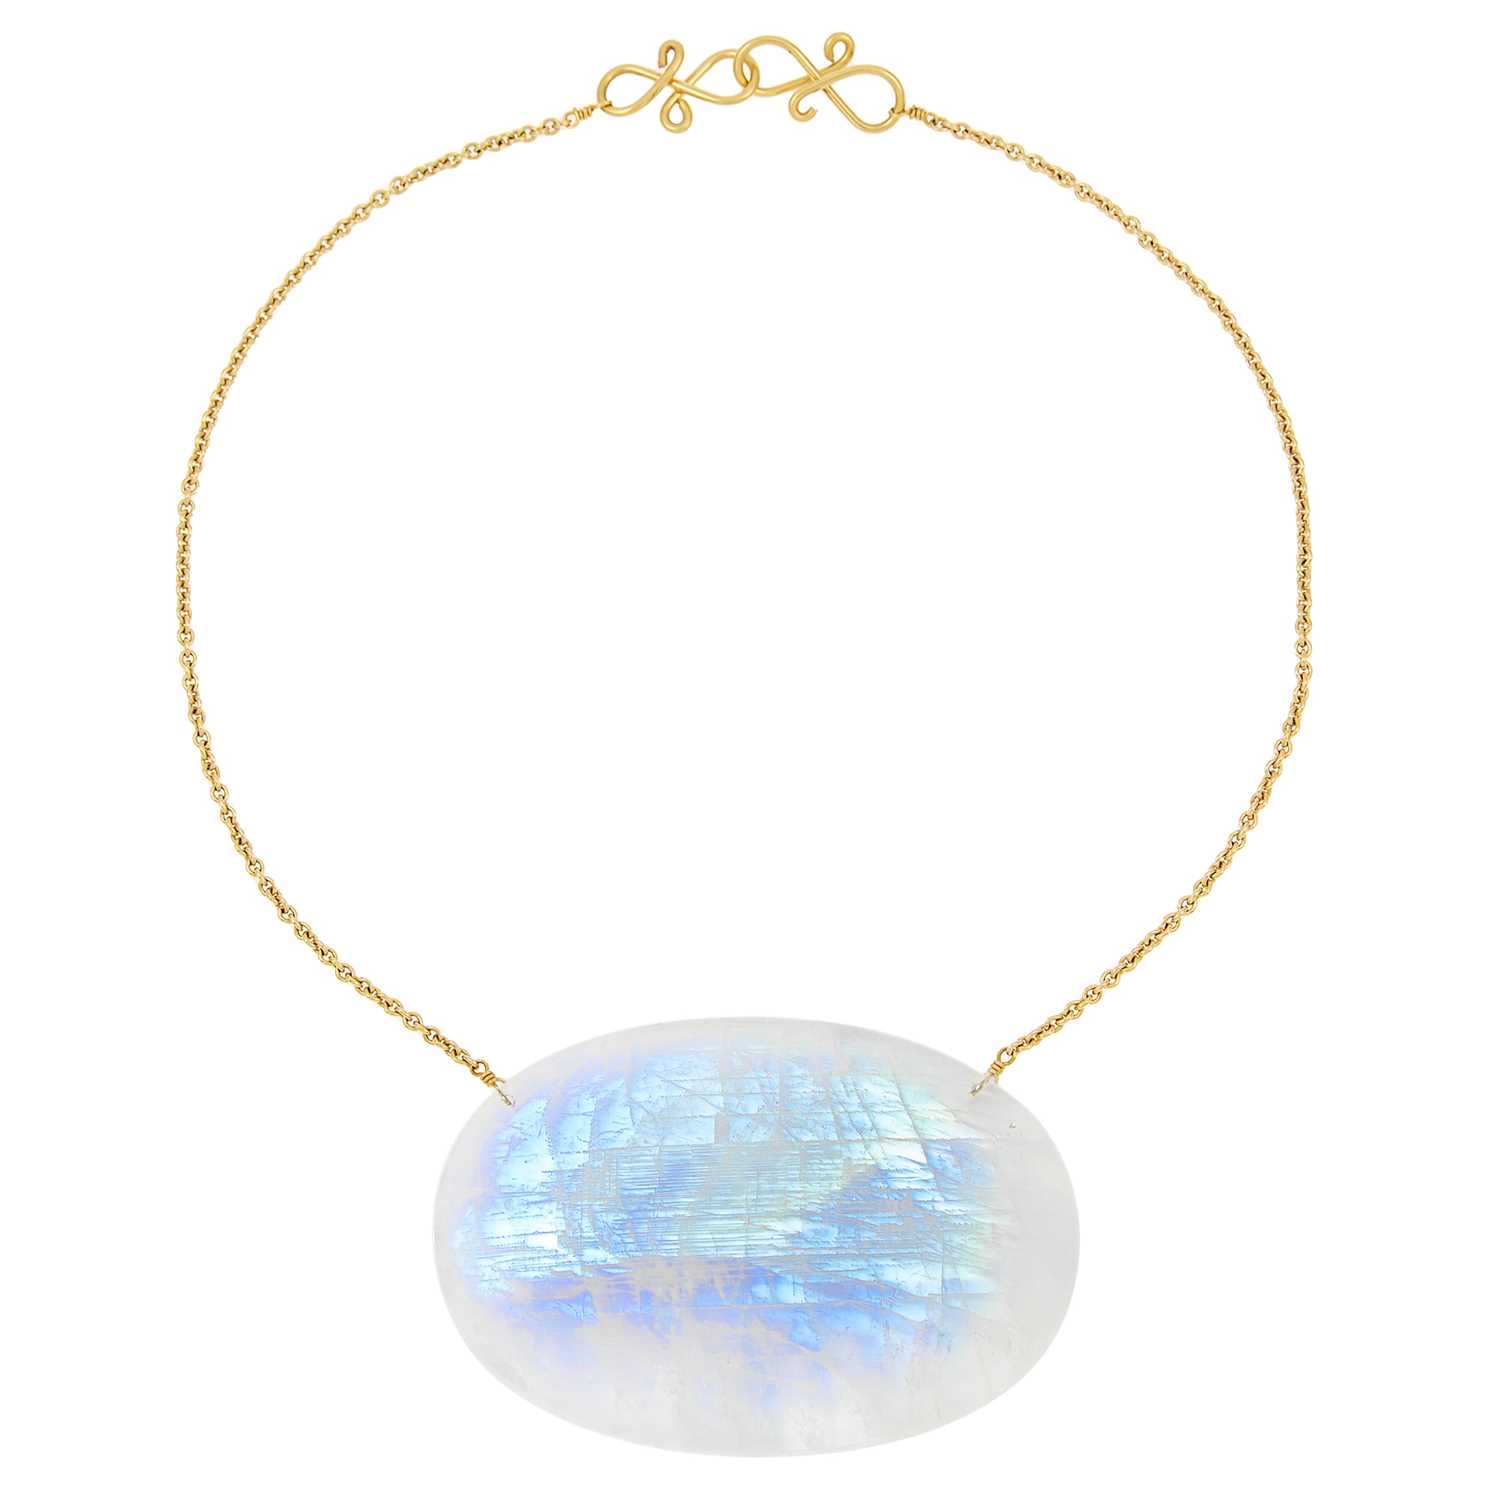 Lot 1011 - Gold and White Labradorite Pendant-Necklace